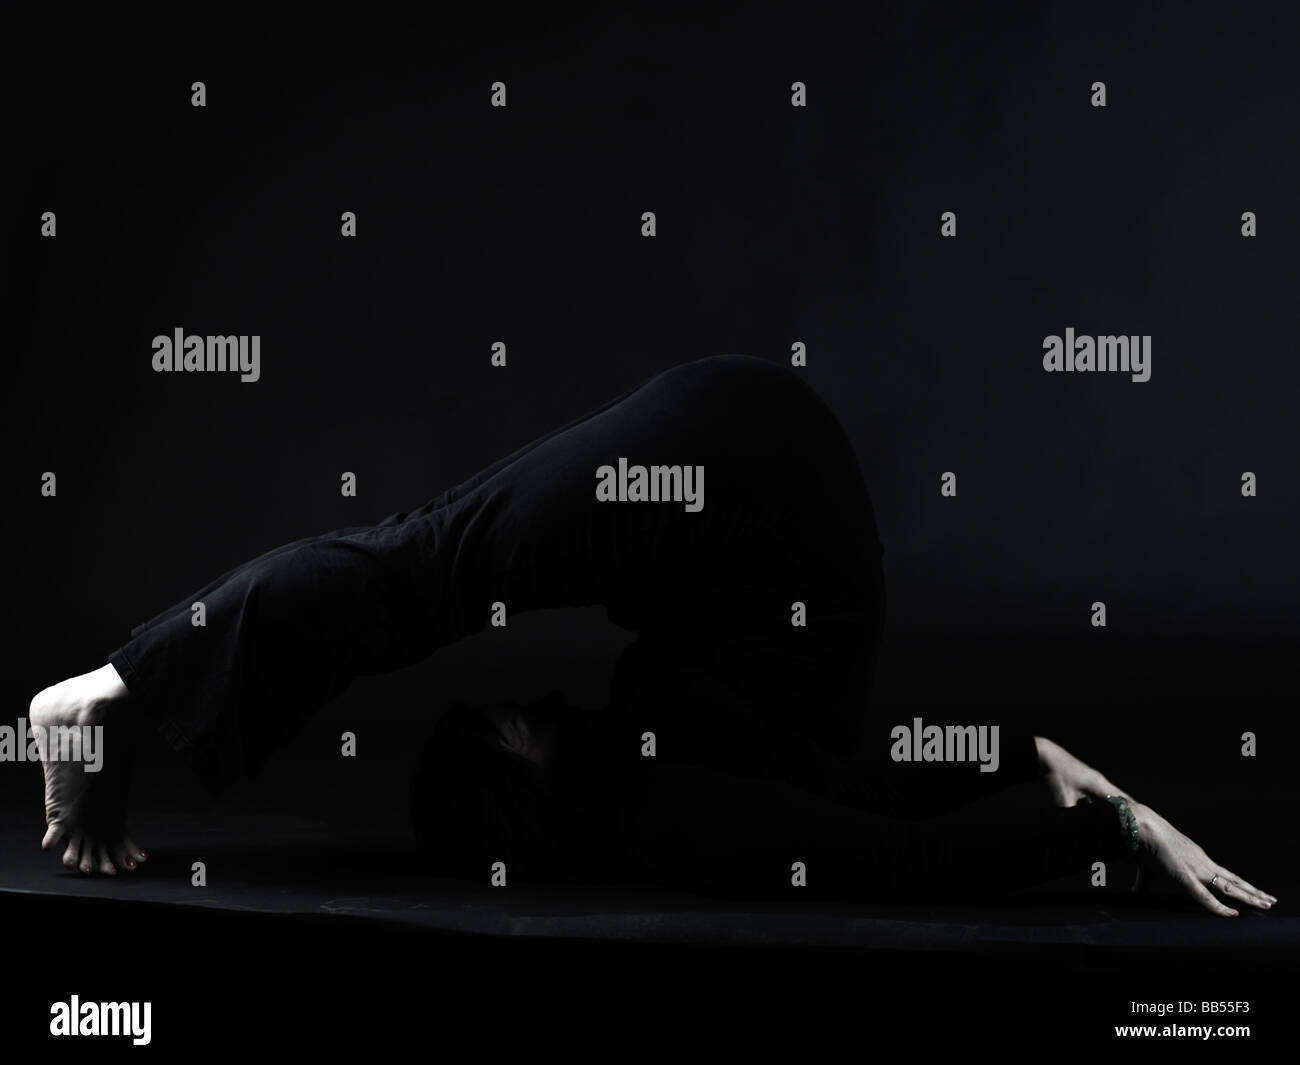 Halasana (Plow Pose) yoga Stock Photo - Alamy